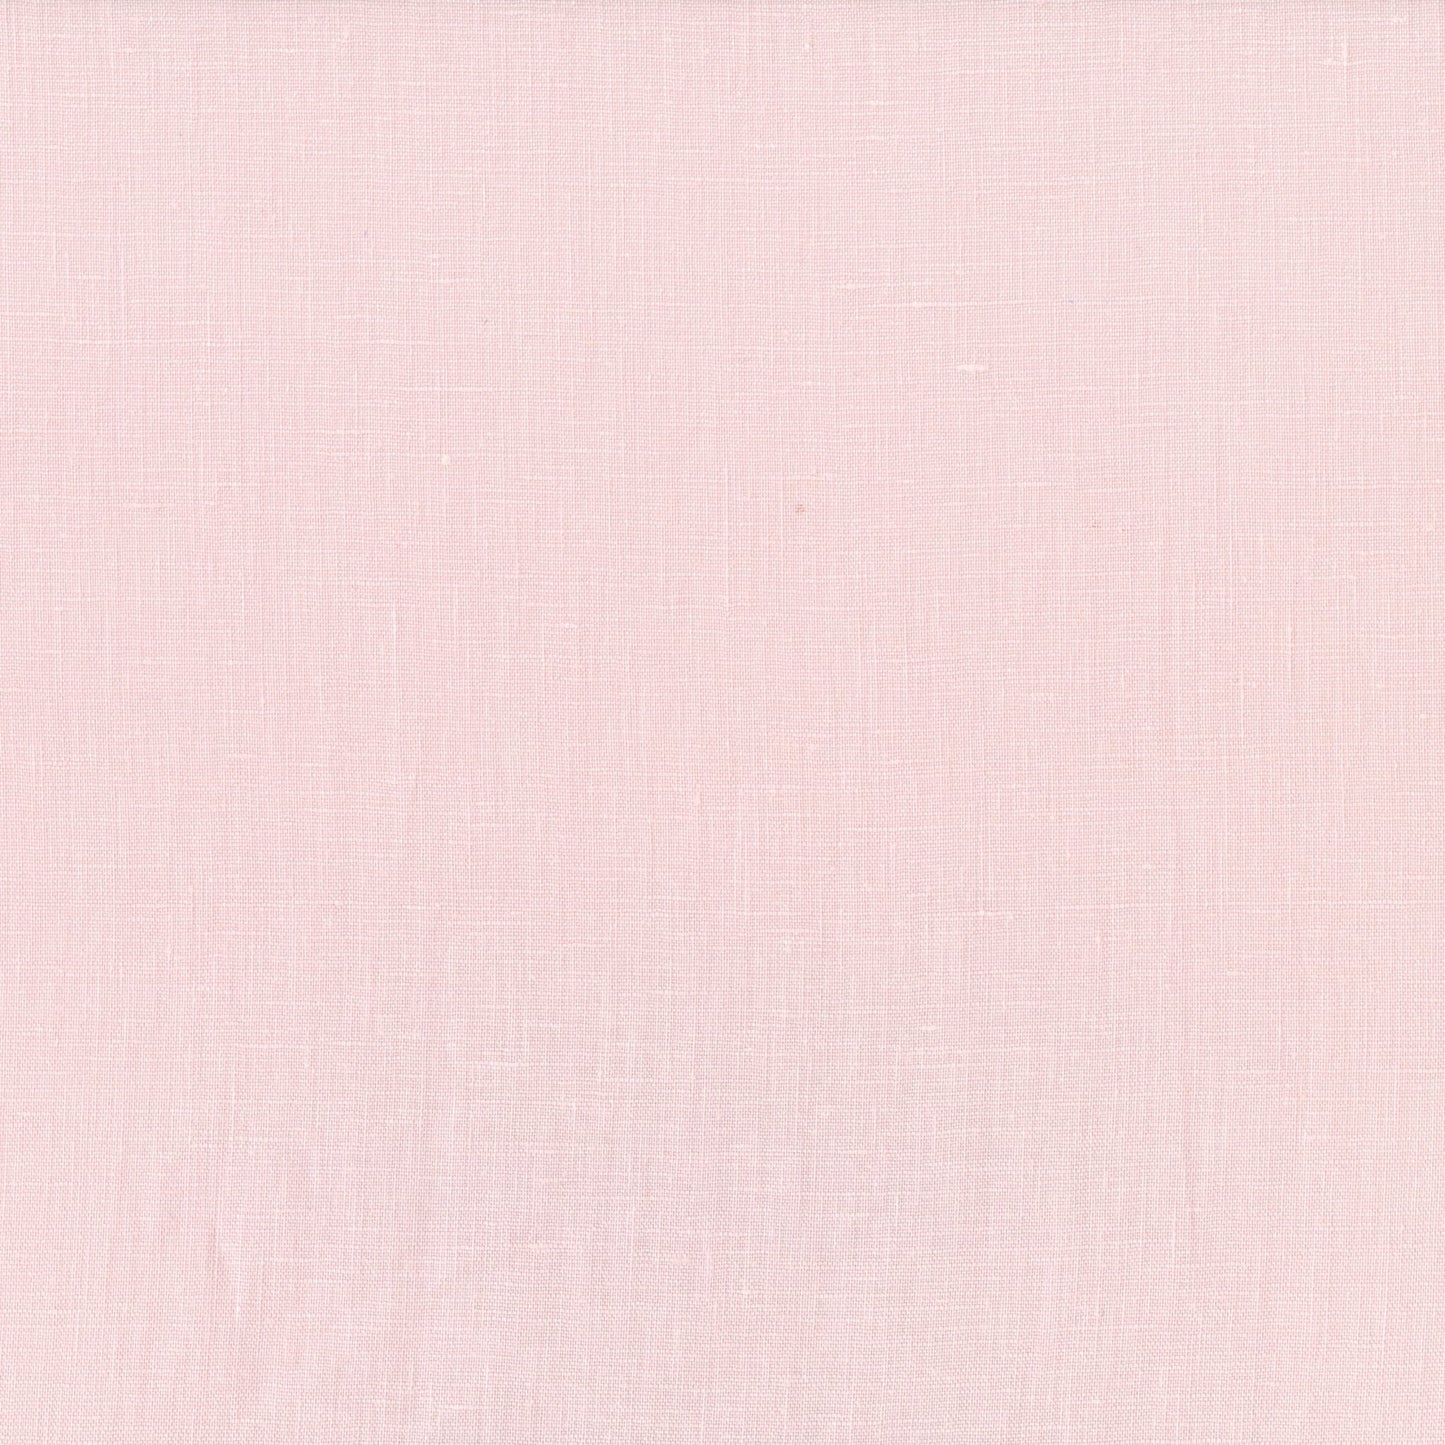 Dusty Pink Linen - New Arrivals Inc